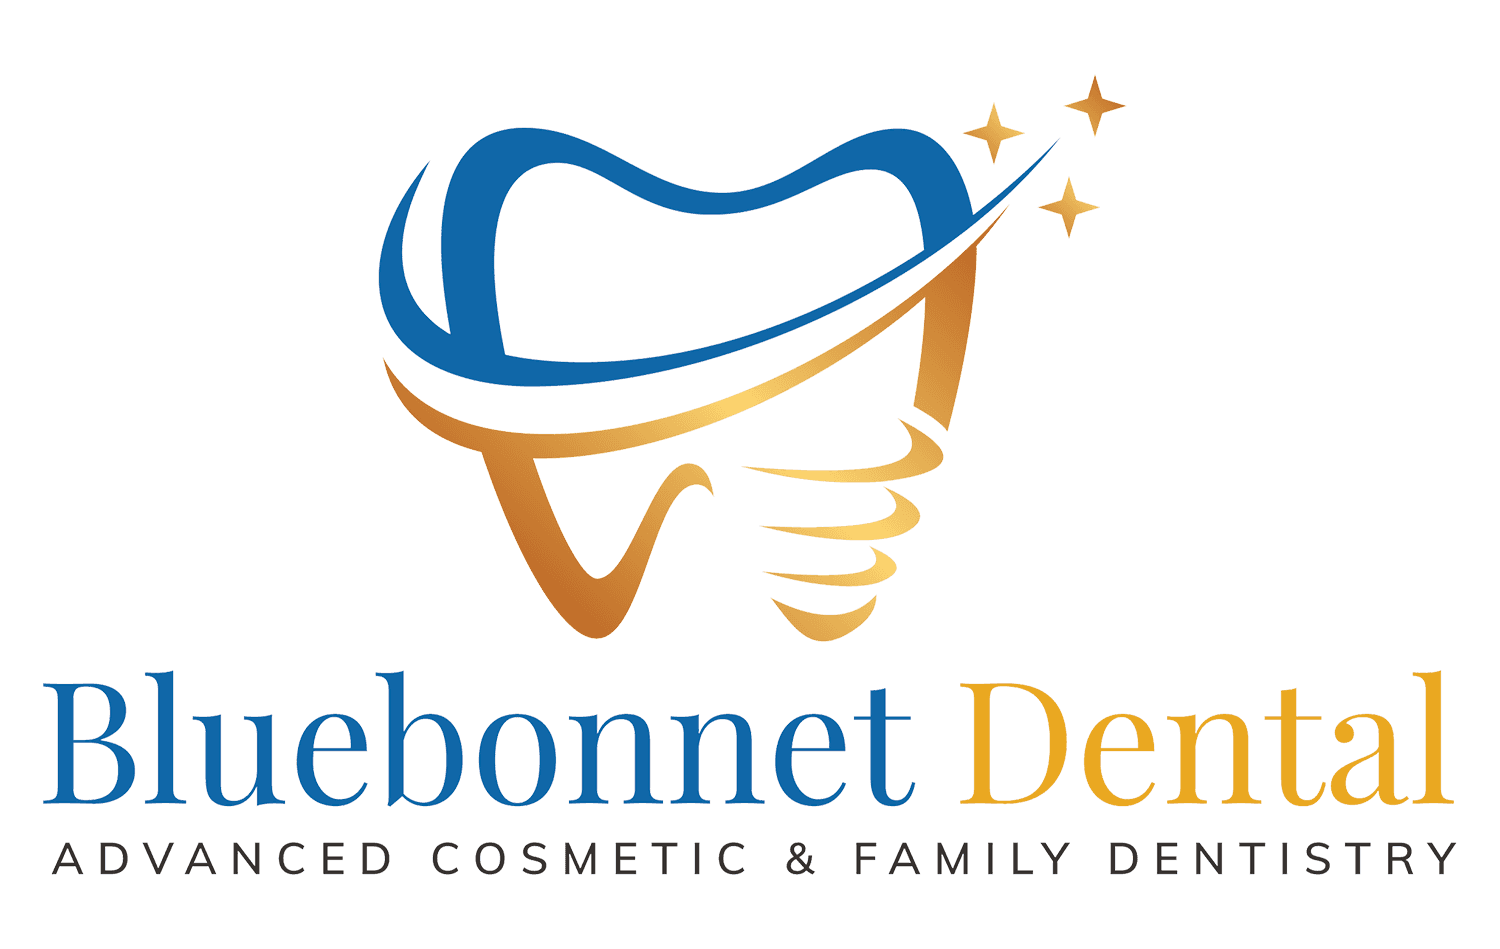 Visit Bluebonnet Dental